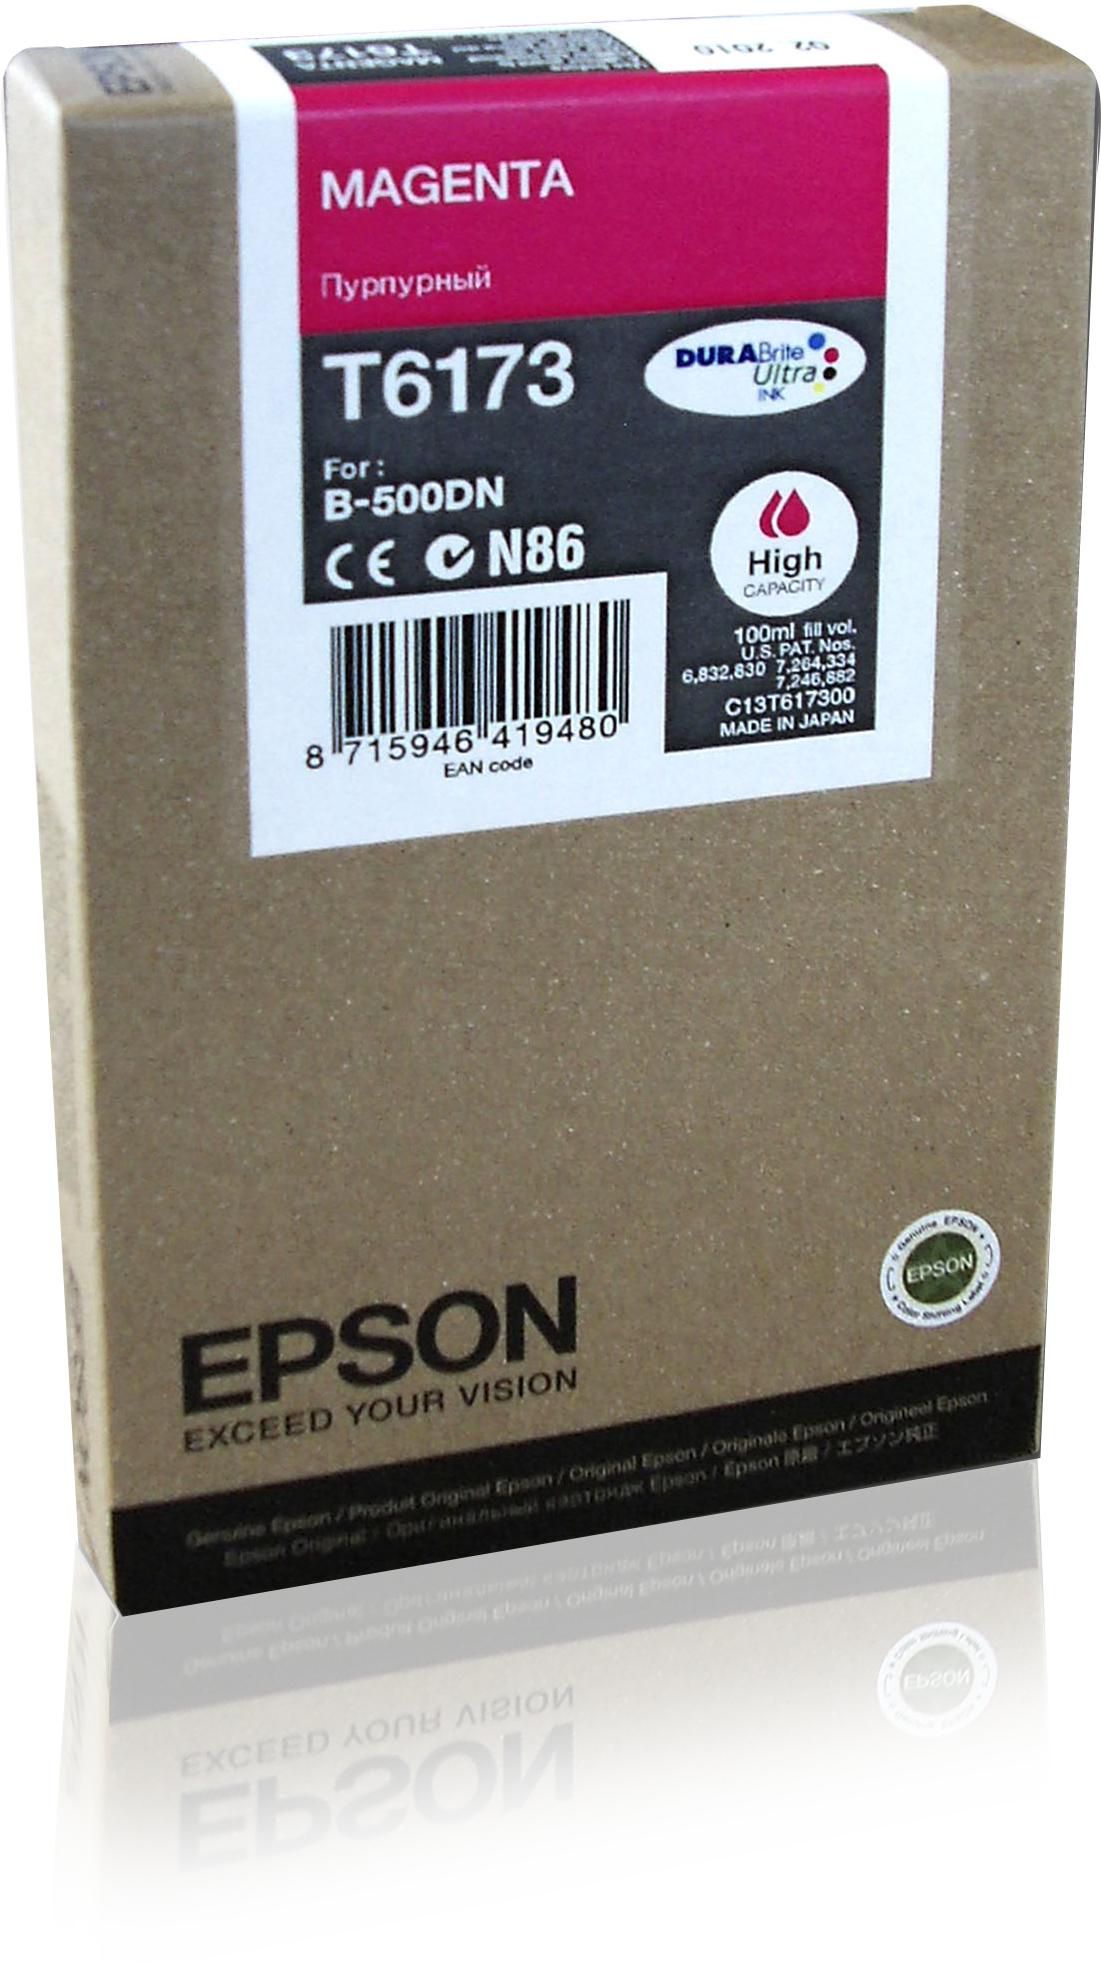 EPSON T6173 Magenta Tintenpatrone